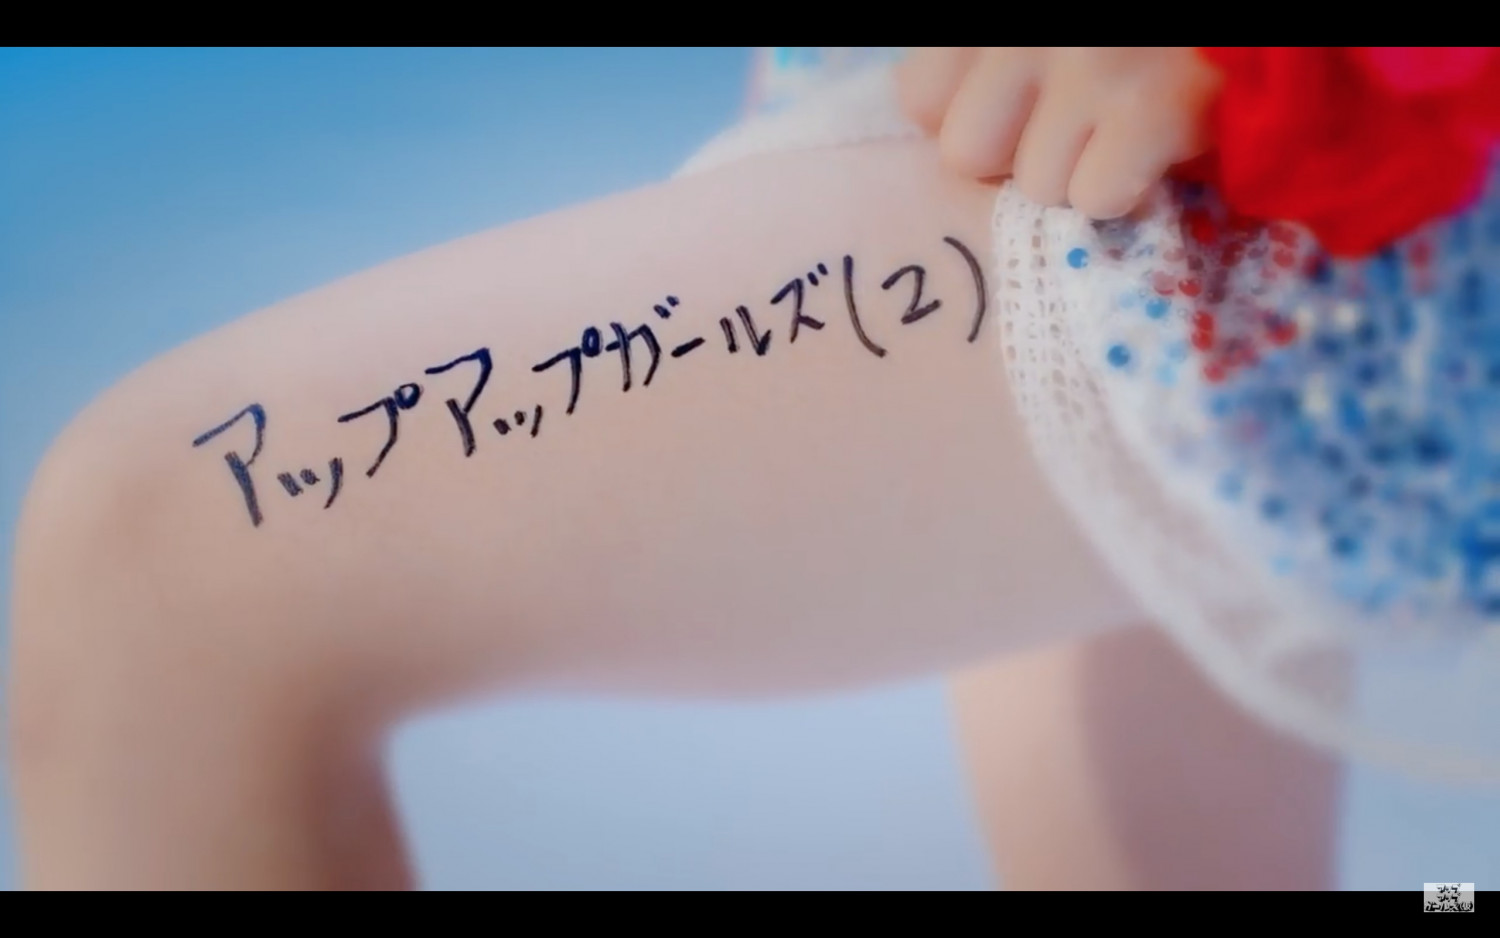 UPUPGIRLS(2) Show Their Thigh in the Sexy MV for “Ninoashi Dancing”!